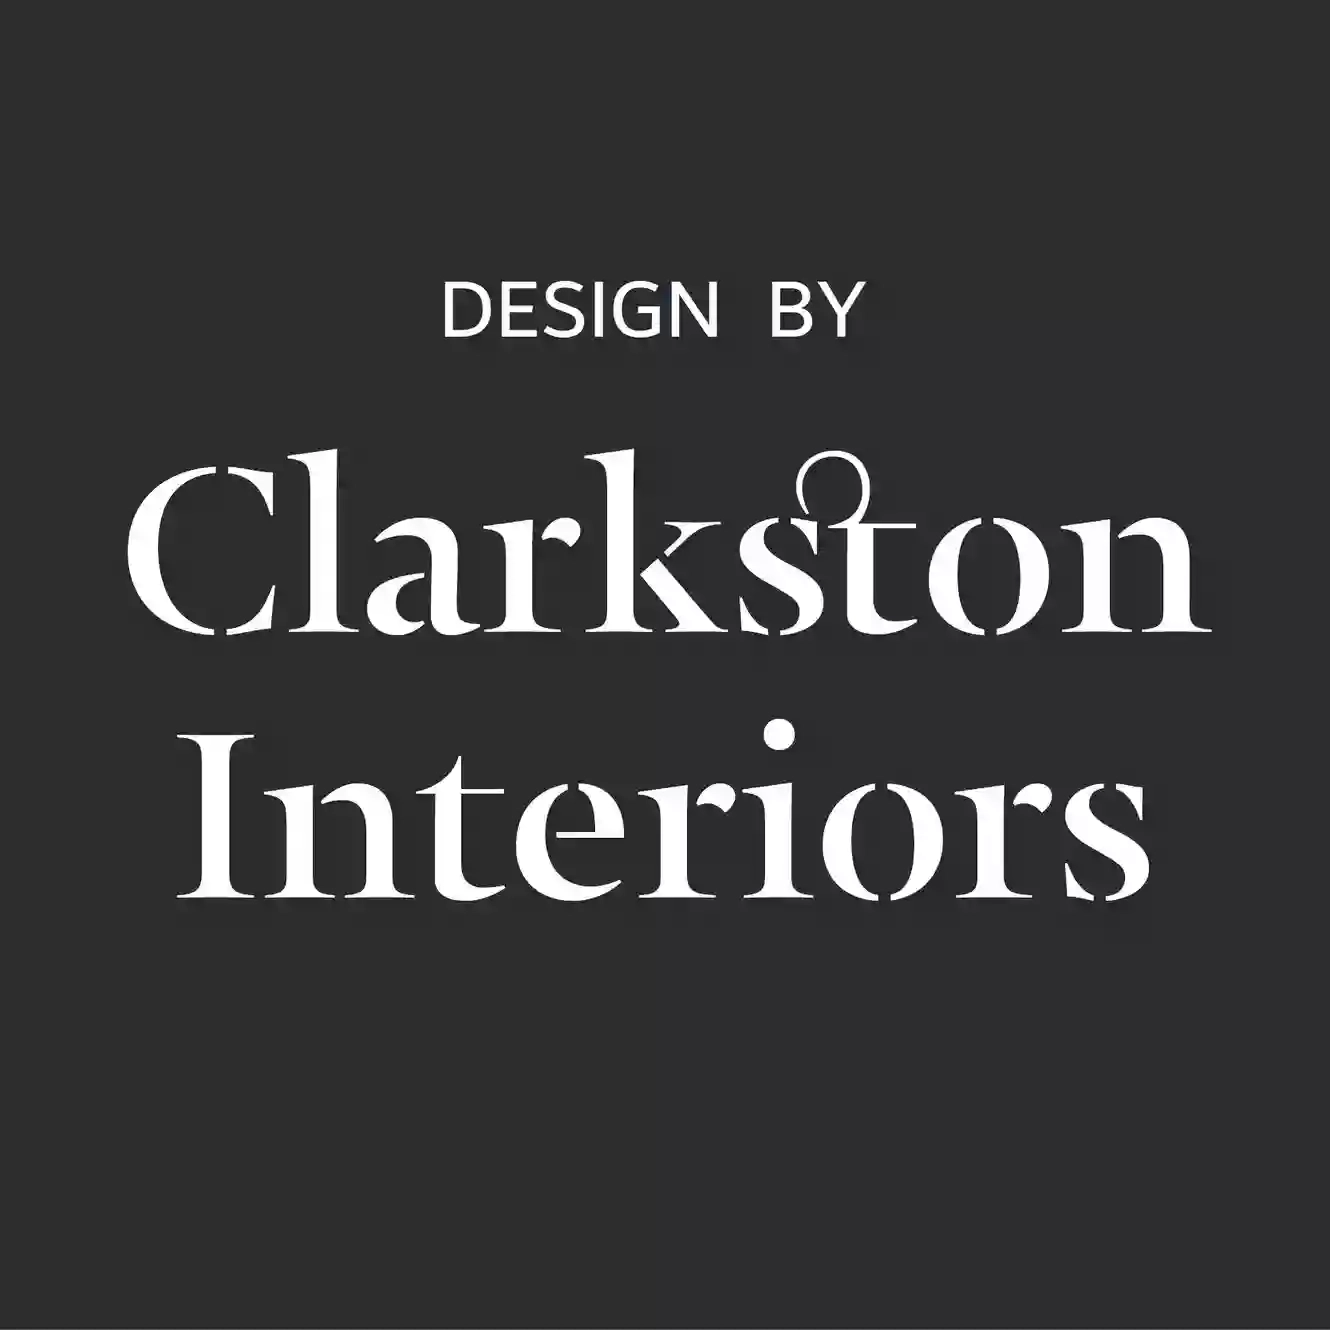 Design by Clarkston Interiors Ltd